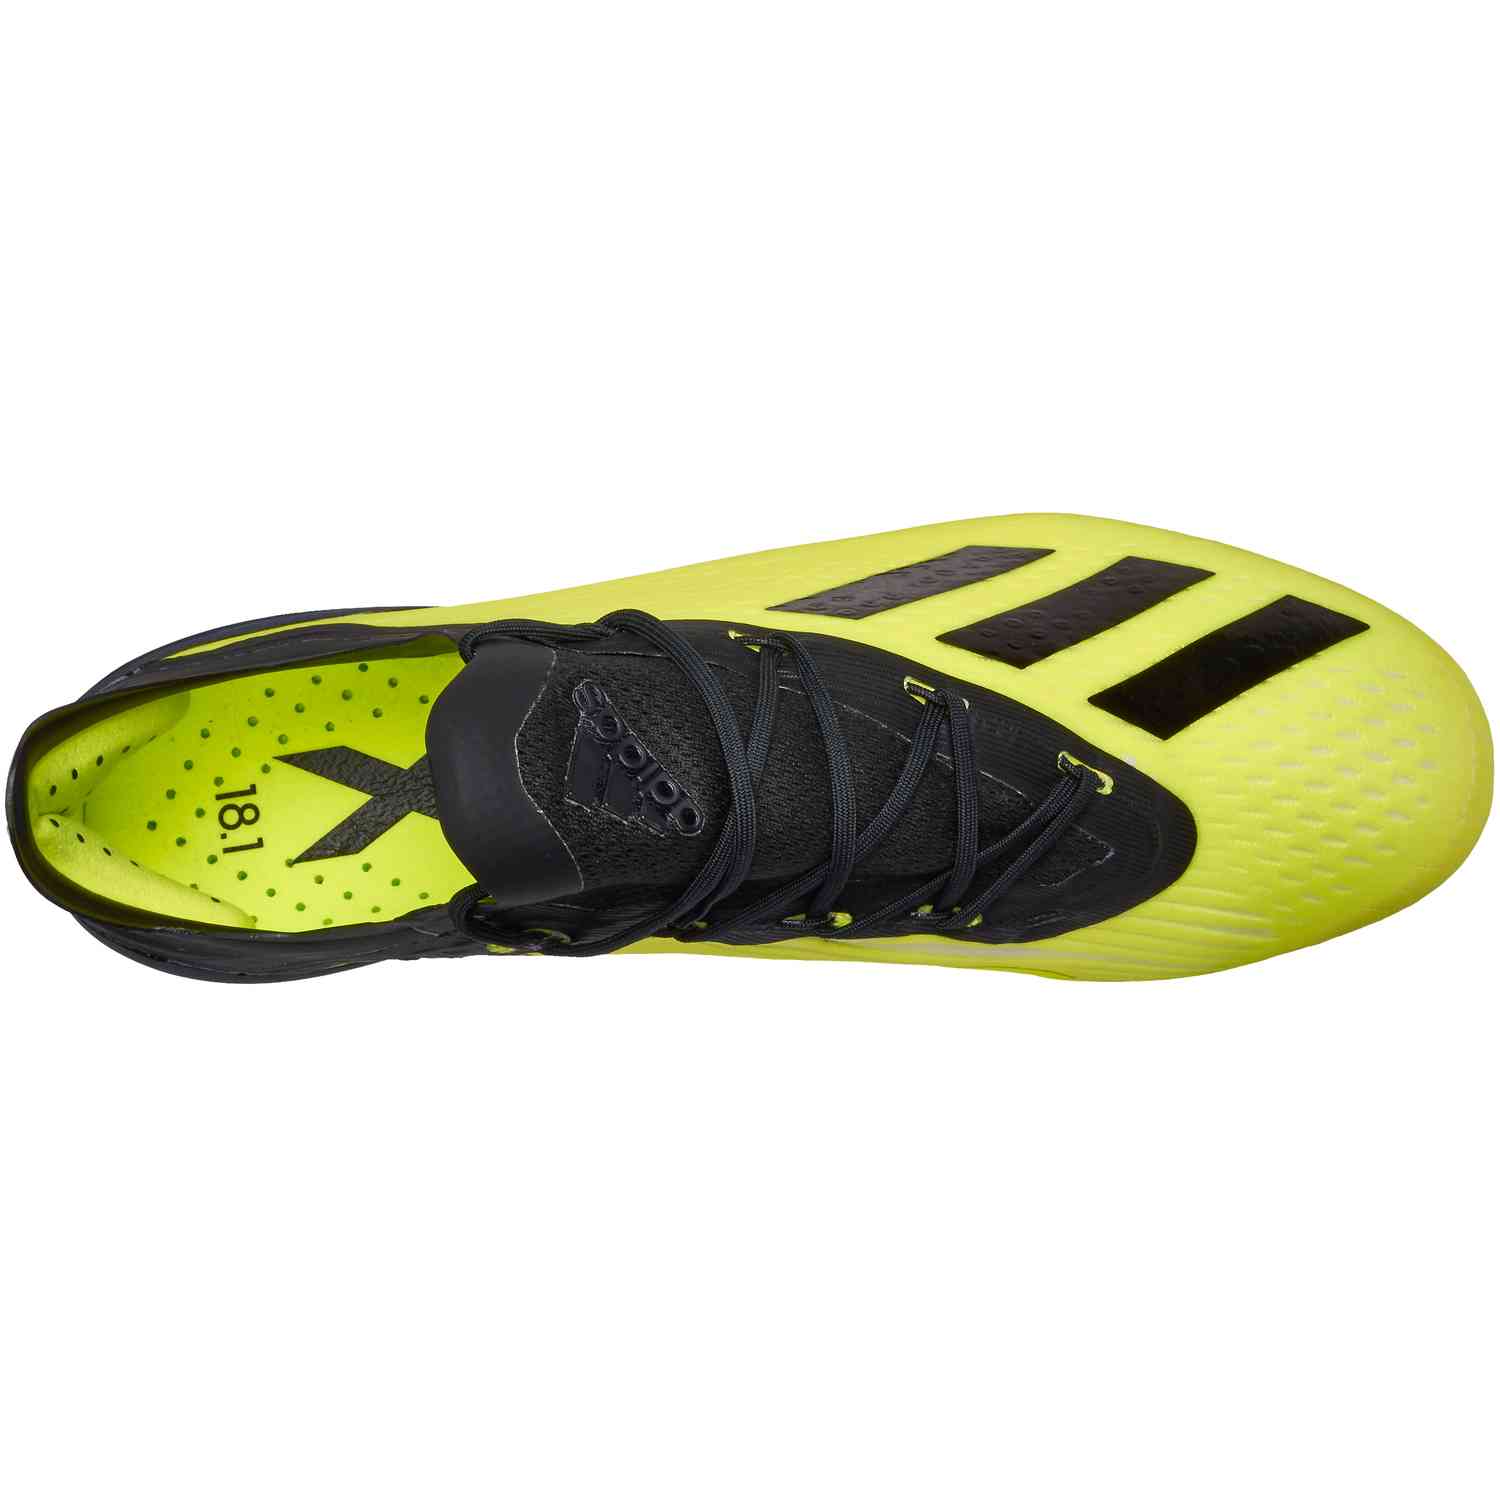 ayudar Víctor Porra adidas X 18.1 FG - Solar Yellow/Black/White - Soccer Master